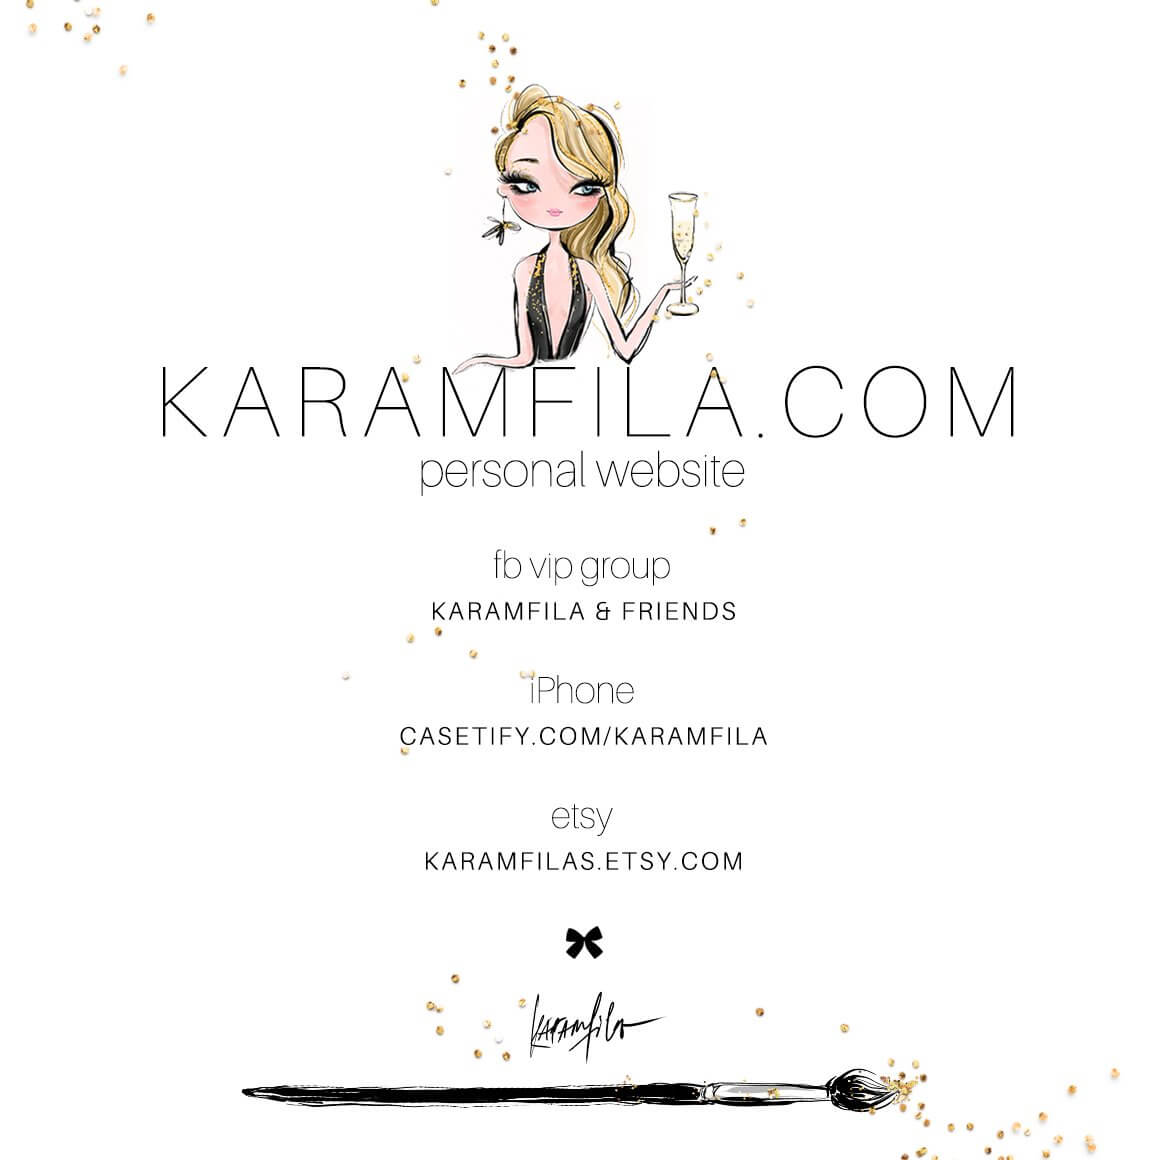 Karamfila site look.